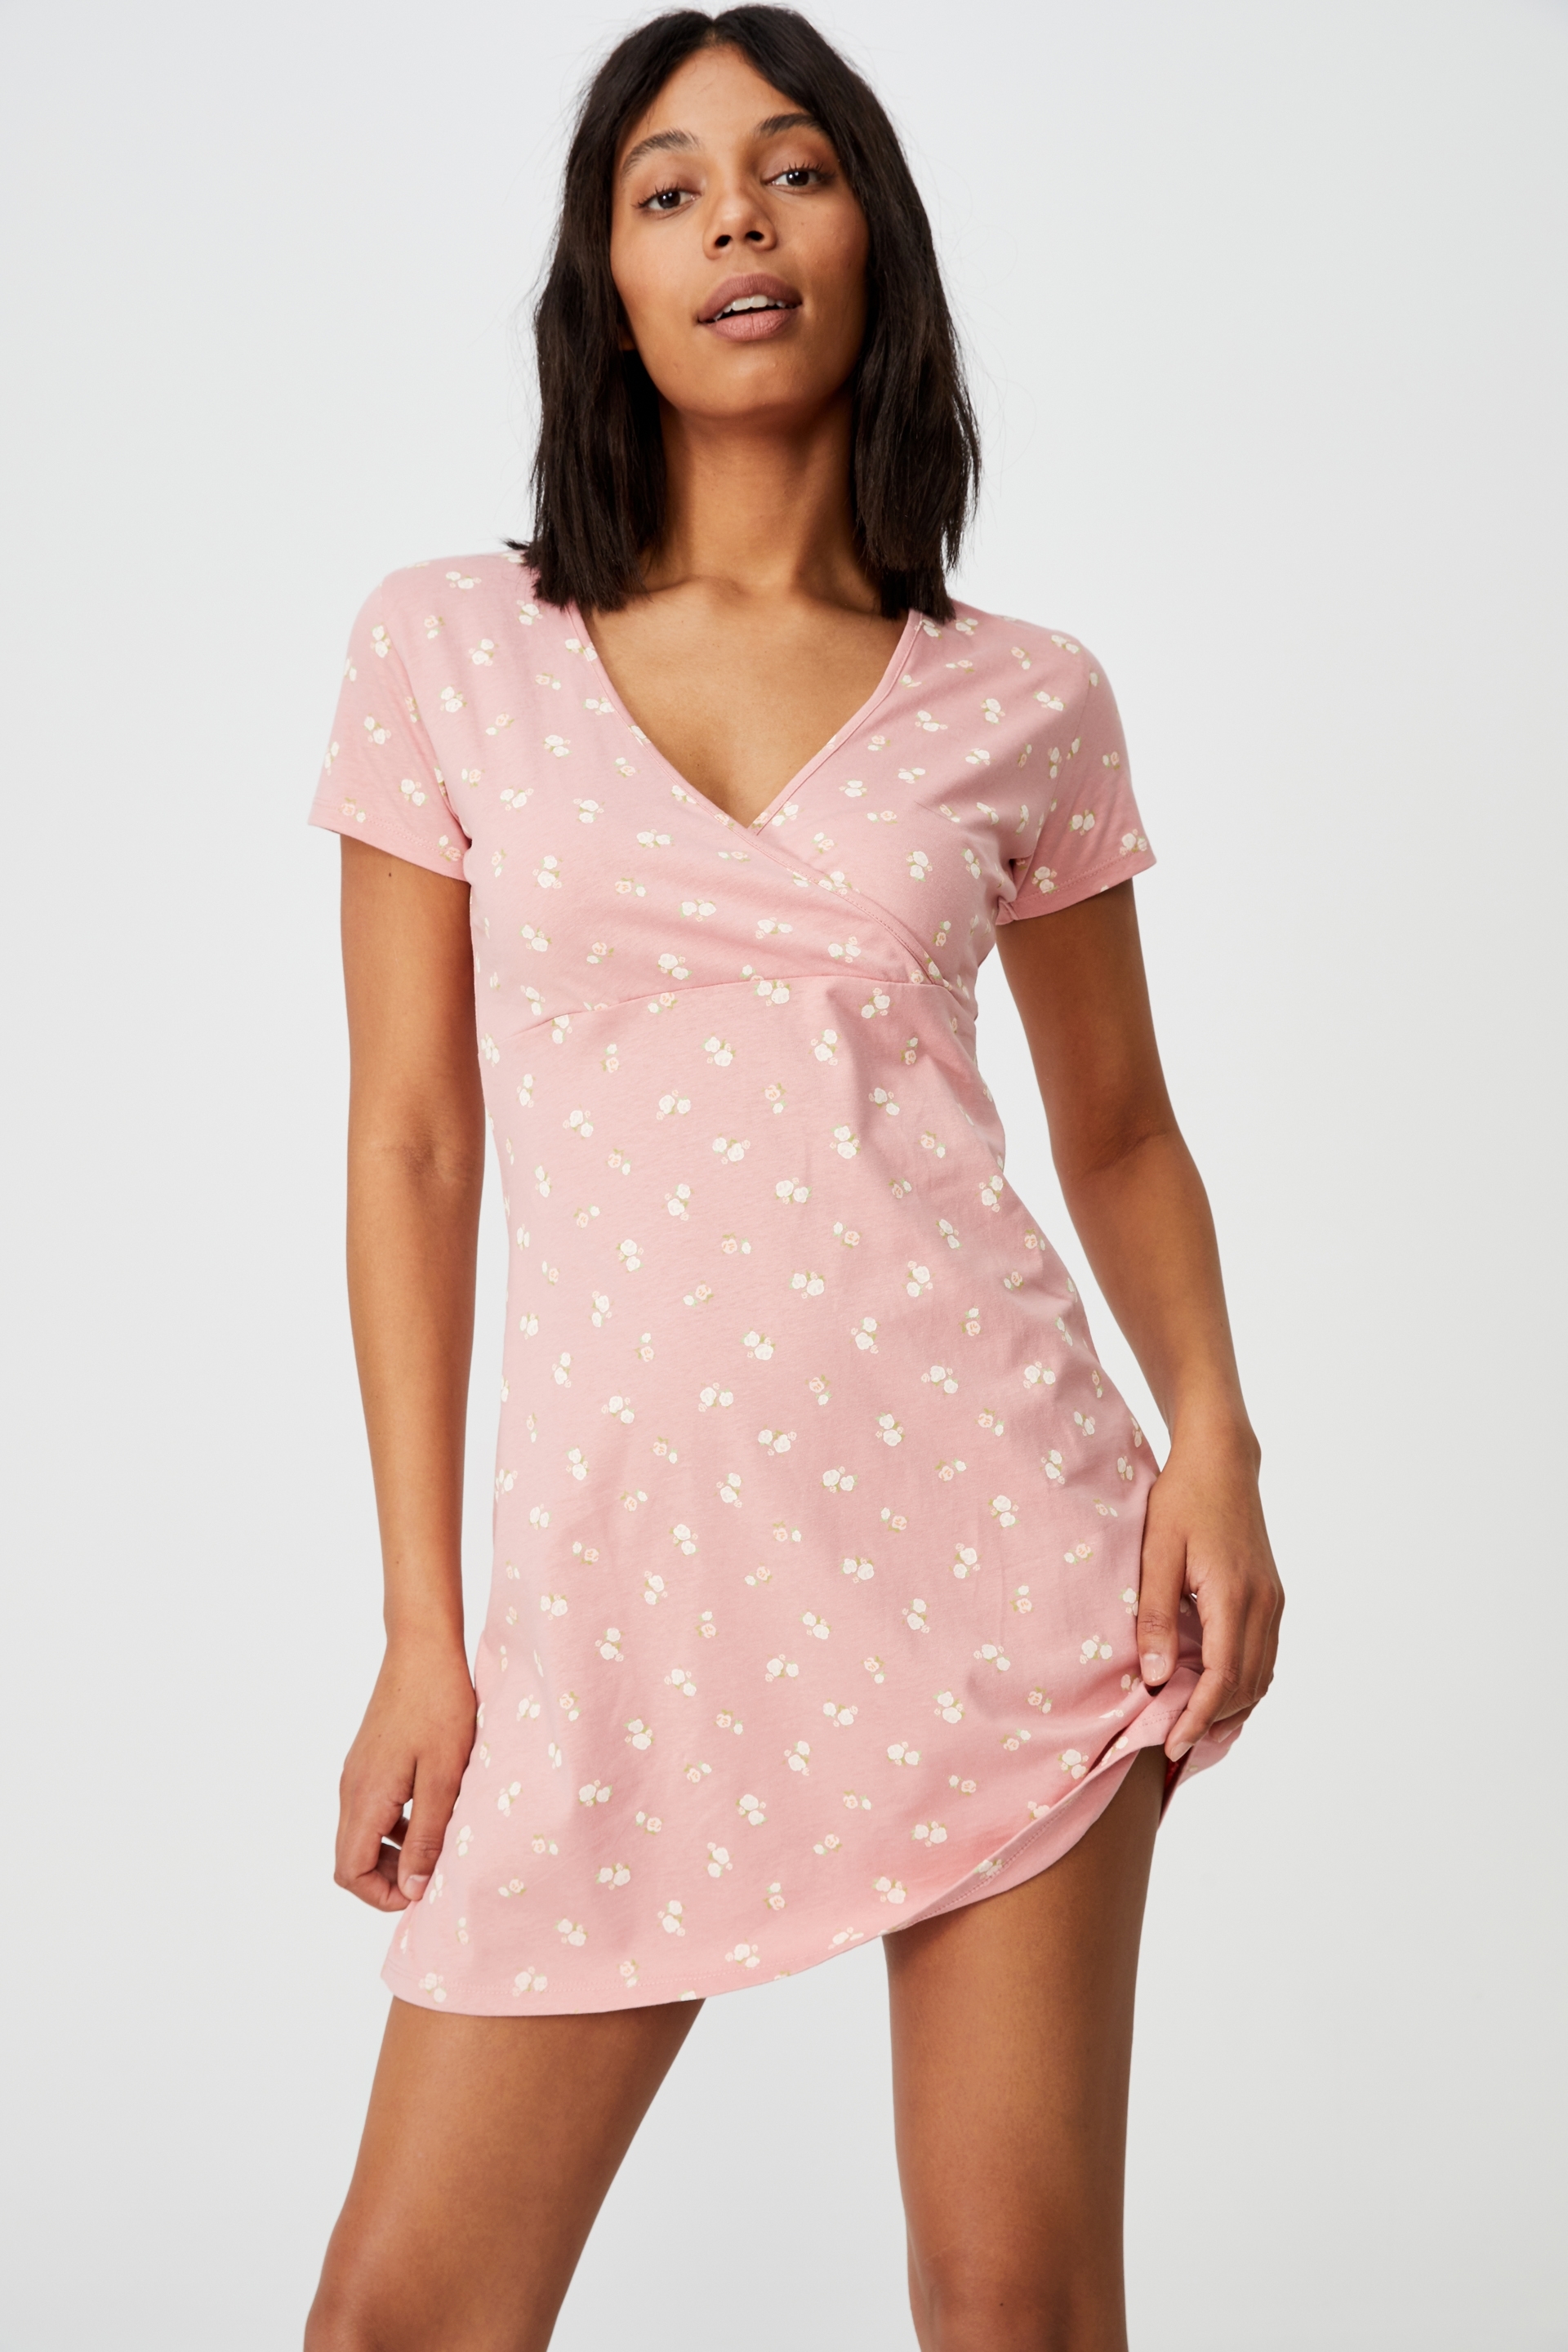 Cotton On Women - Bessie Cross Over Mini Dress - Ruthie rose petal pink